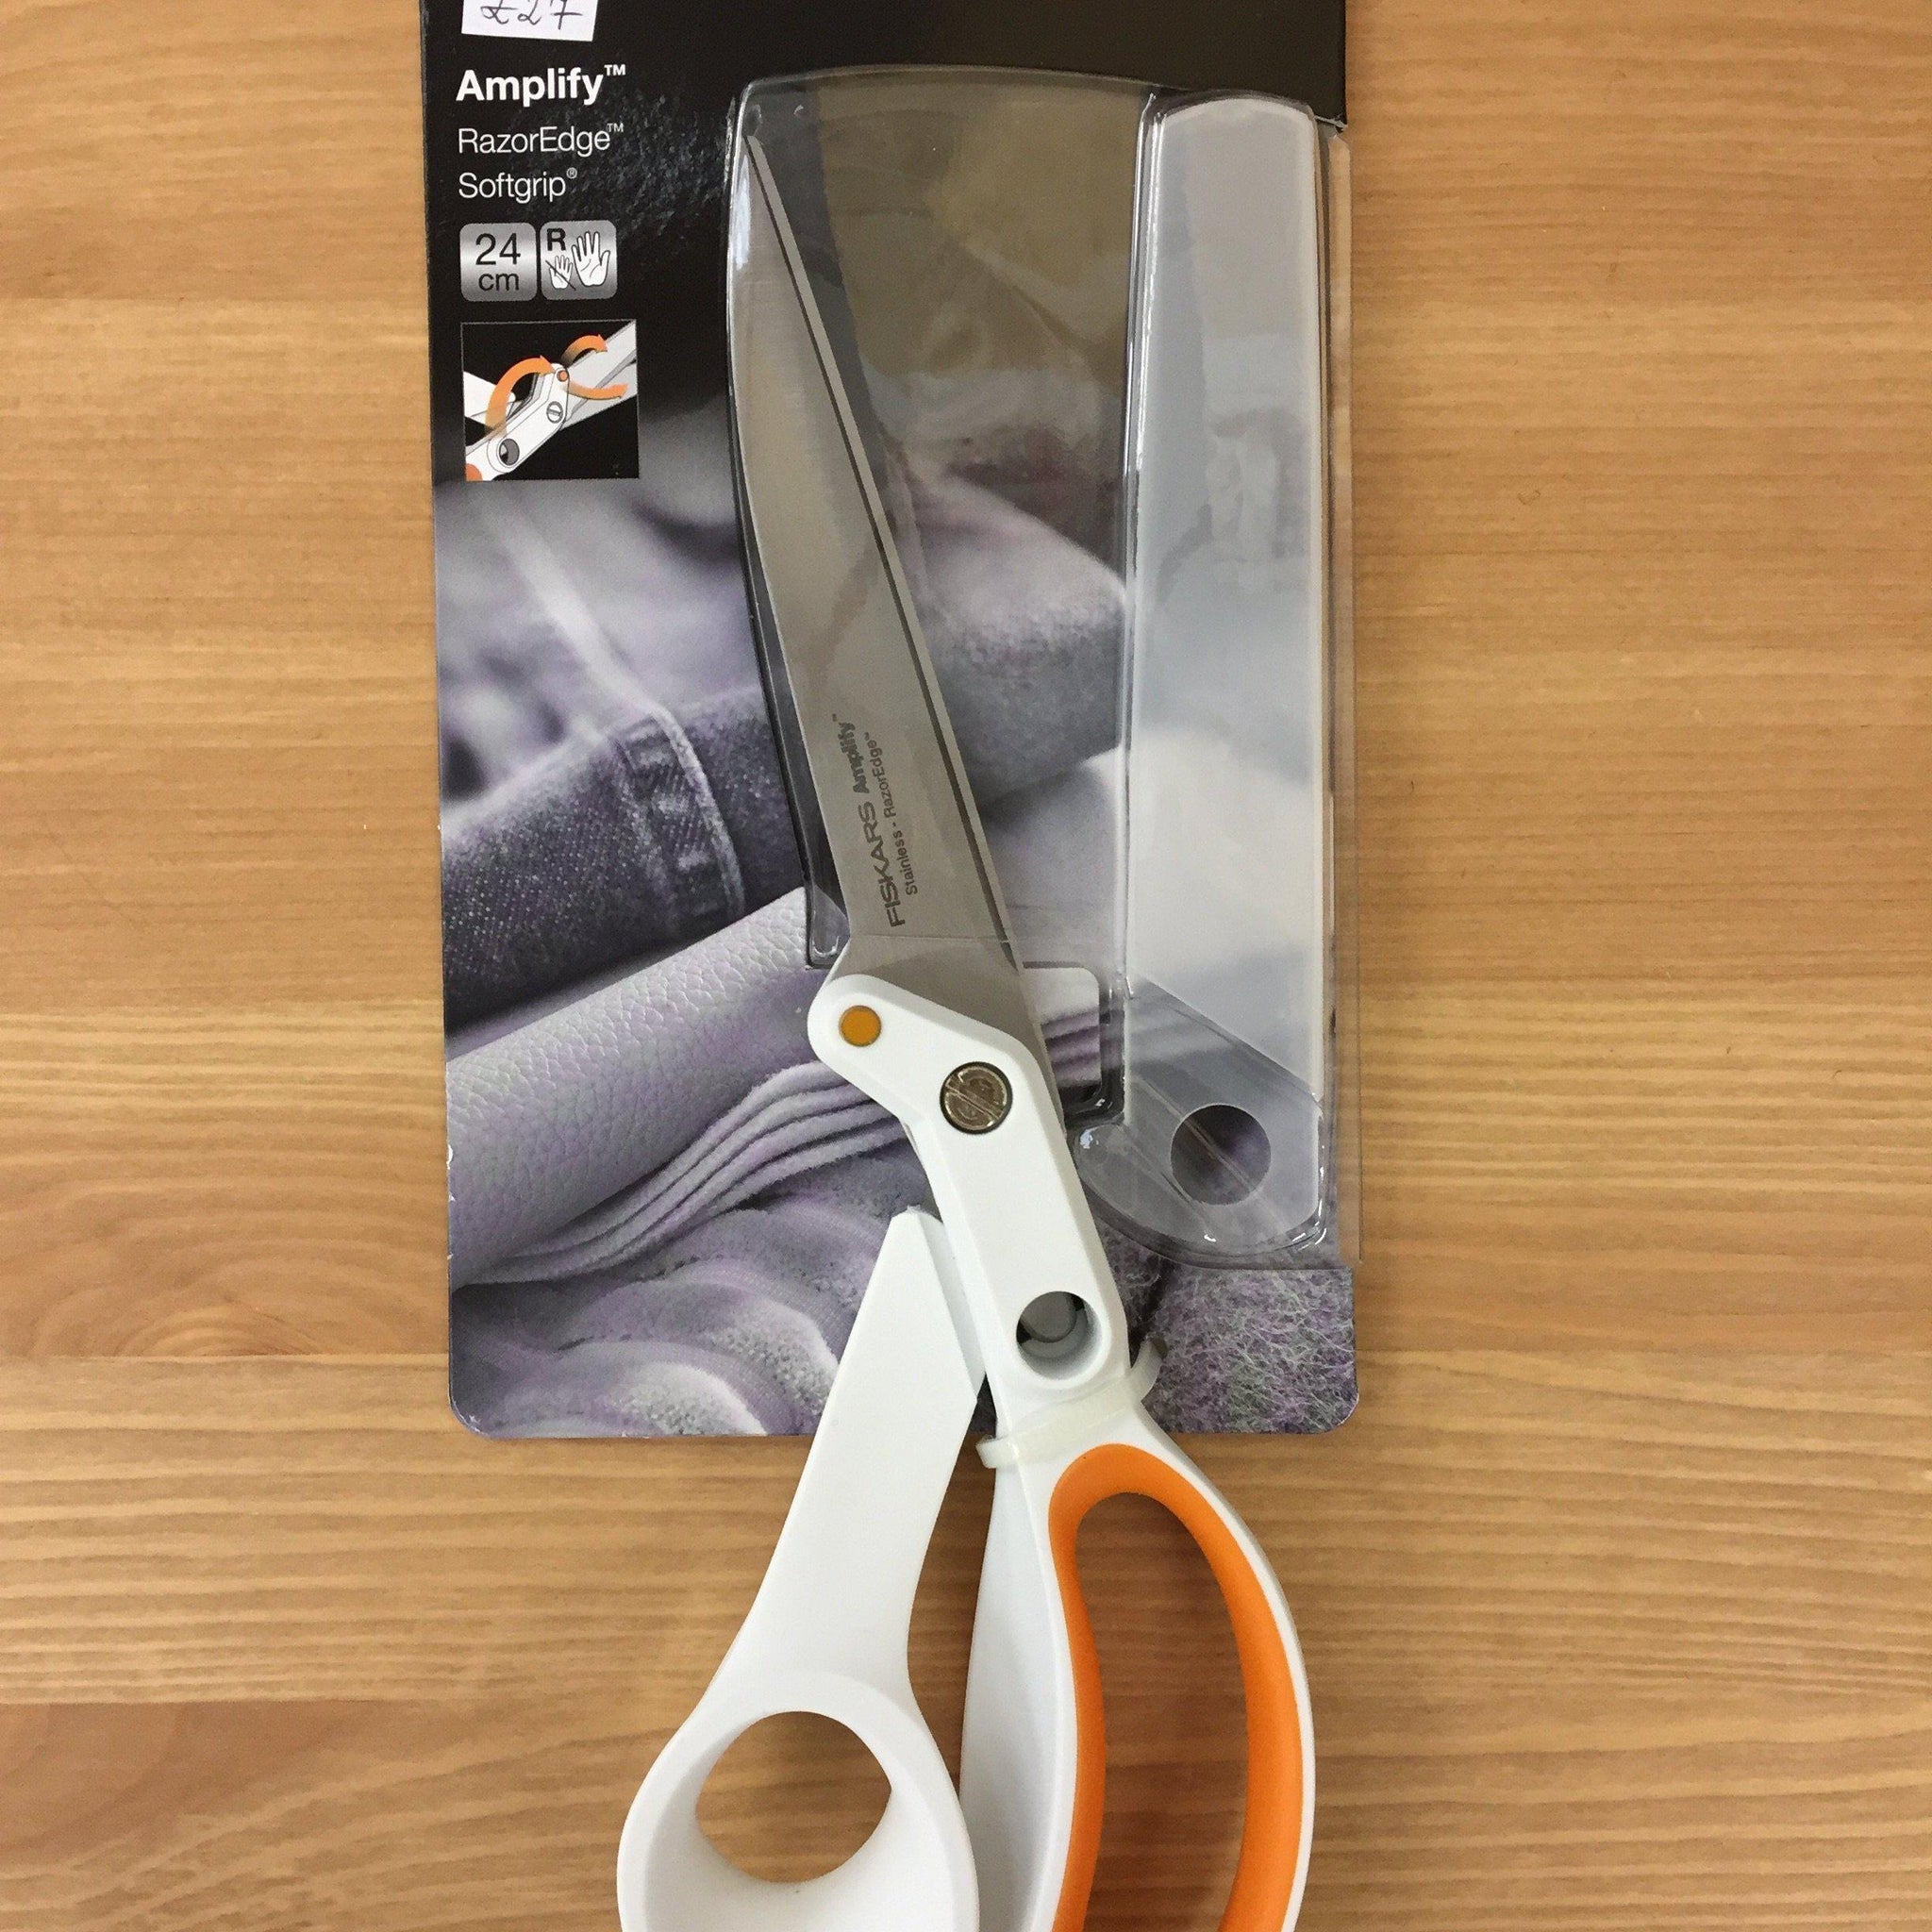 Fiskars Amplify RazorEdge Scissors 24 cm Fiskars Measuring Tools and Cutting - Fabric Mouse